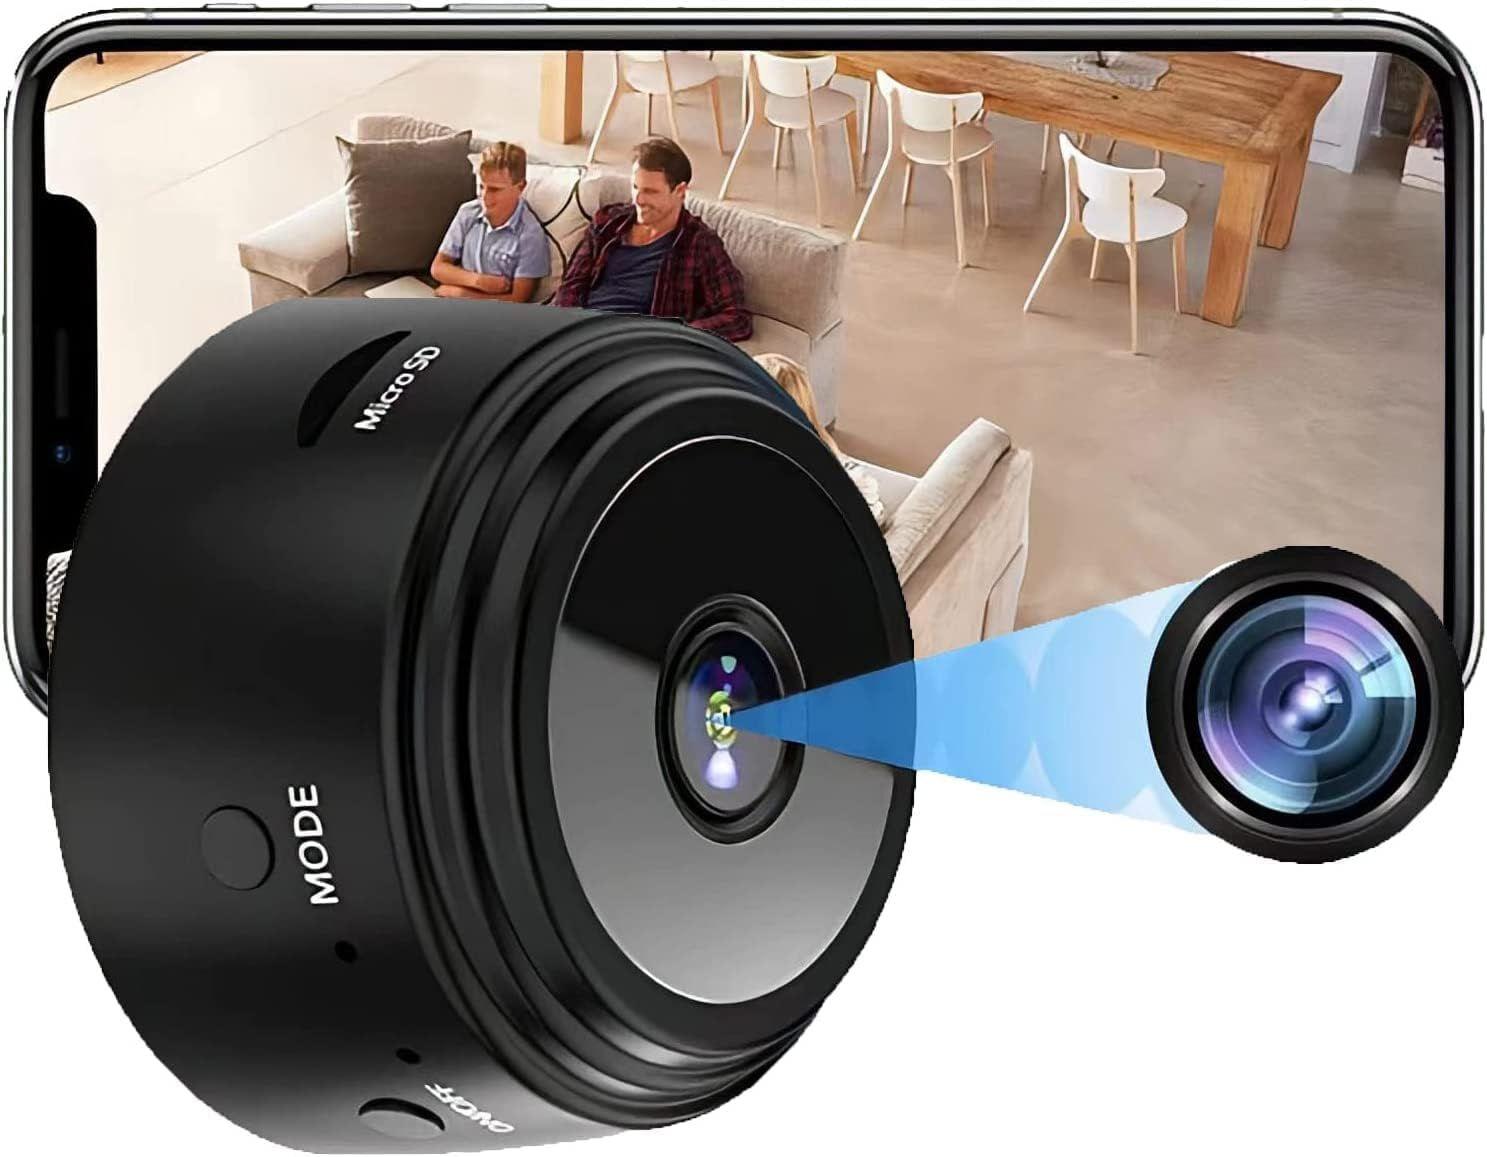 Caméra espion GENERIQUE Mini caméra de surveillance infrarouge